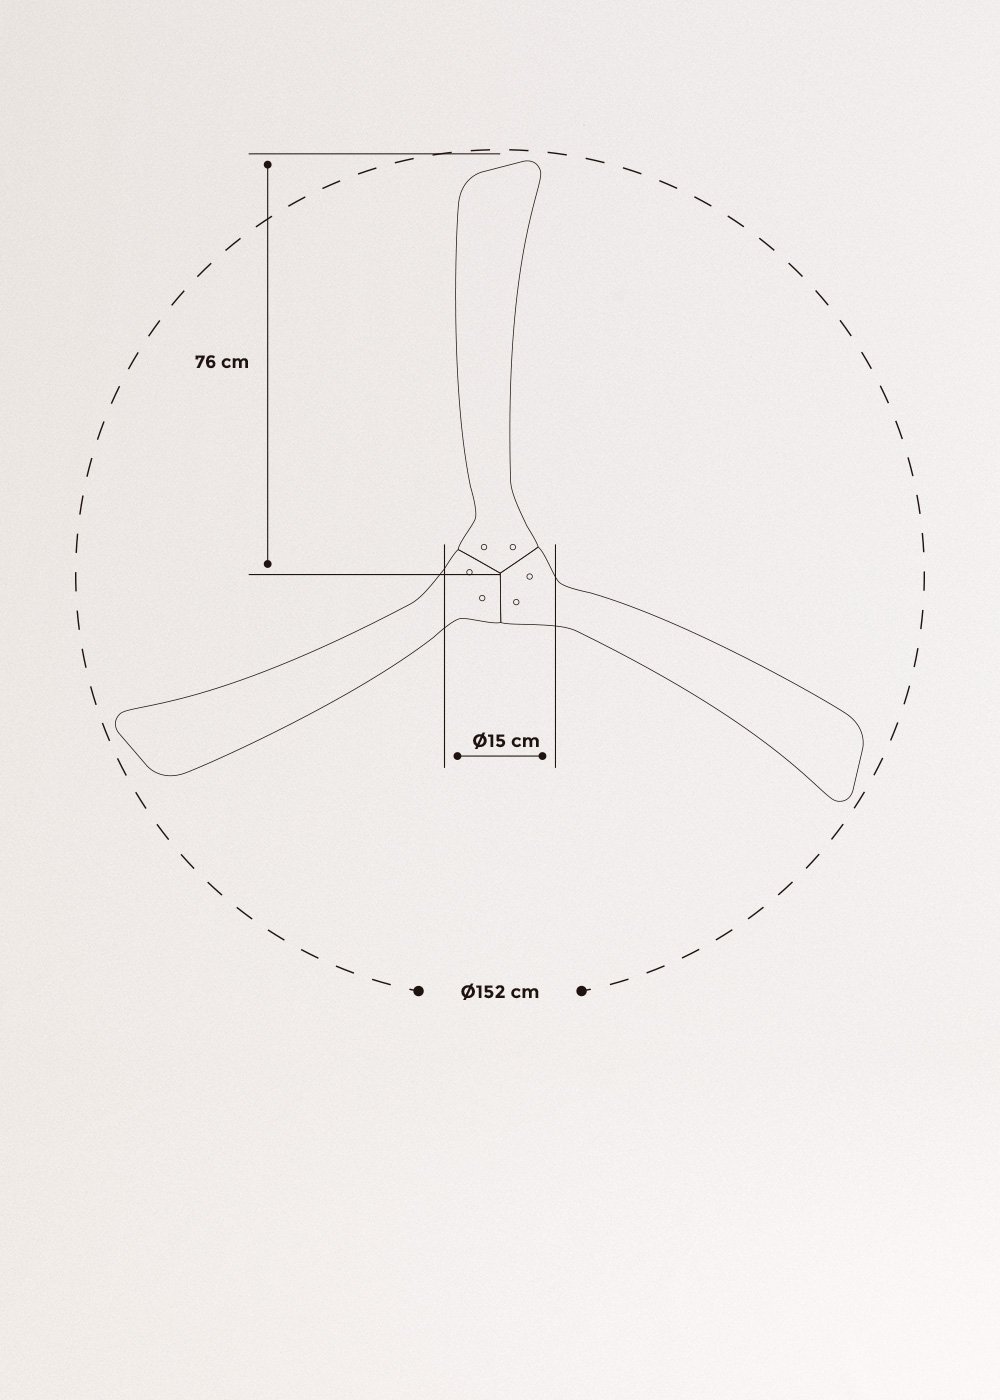 WIND LARGE - Ventilador de techo 40W silencioso XL Ø152 cm - Create